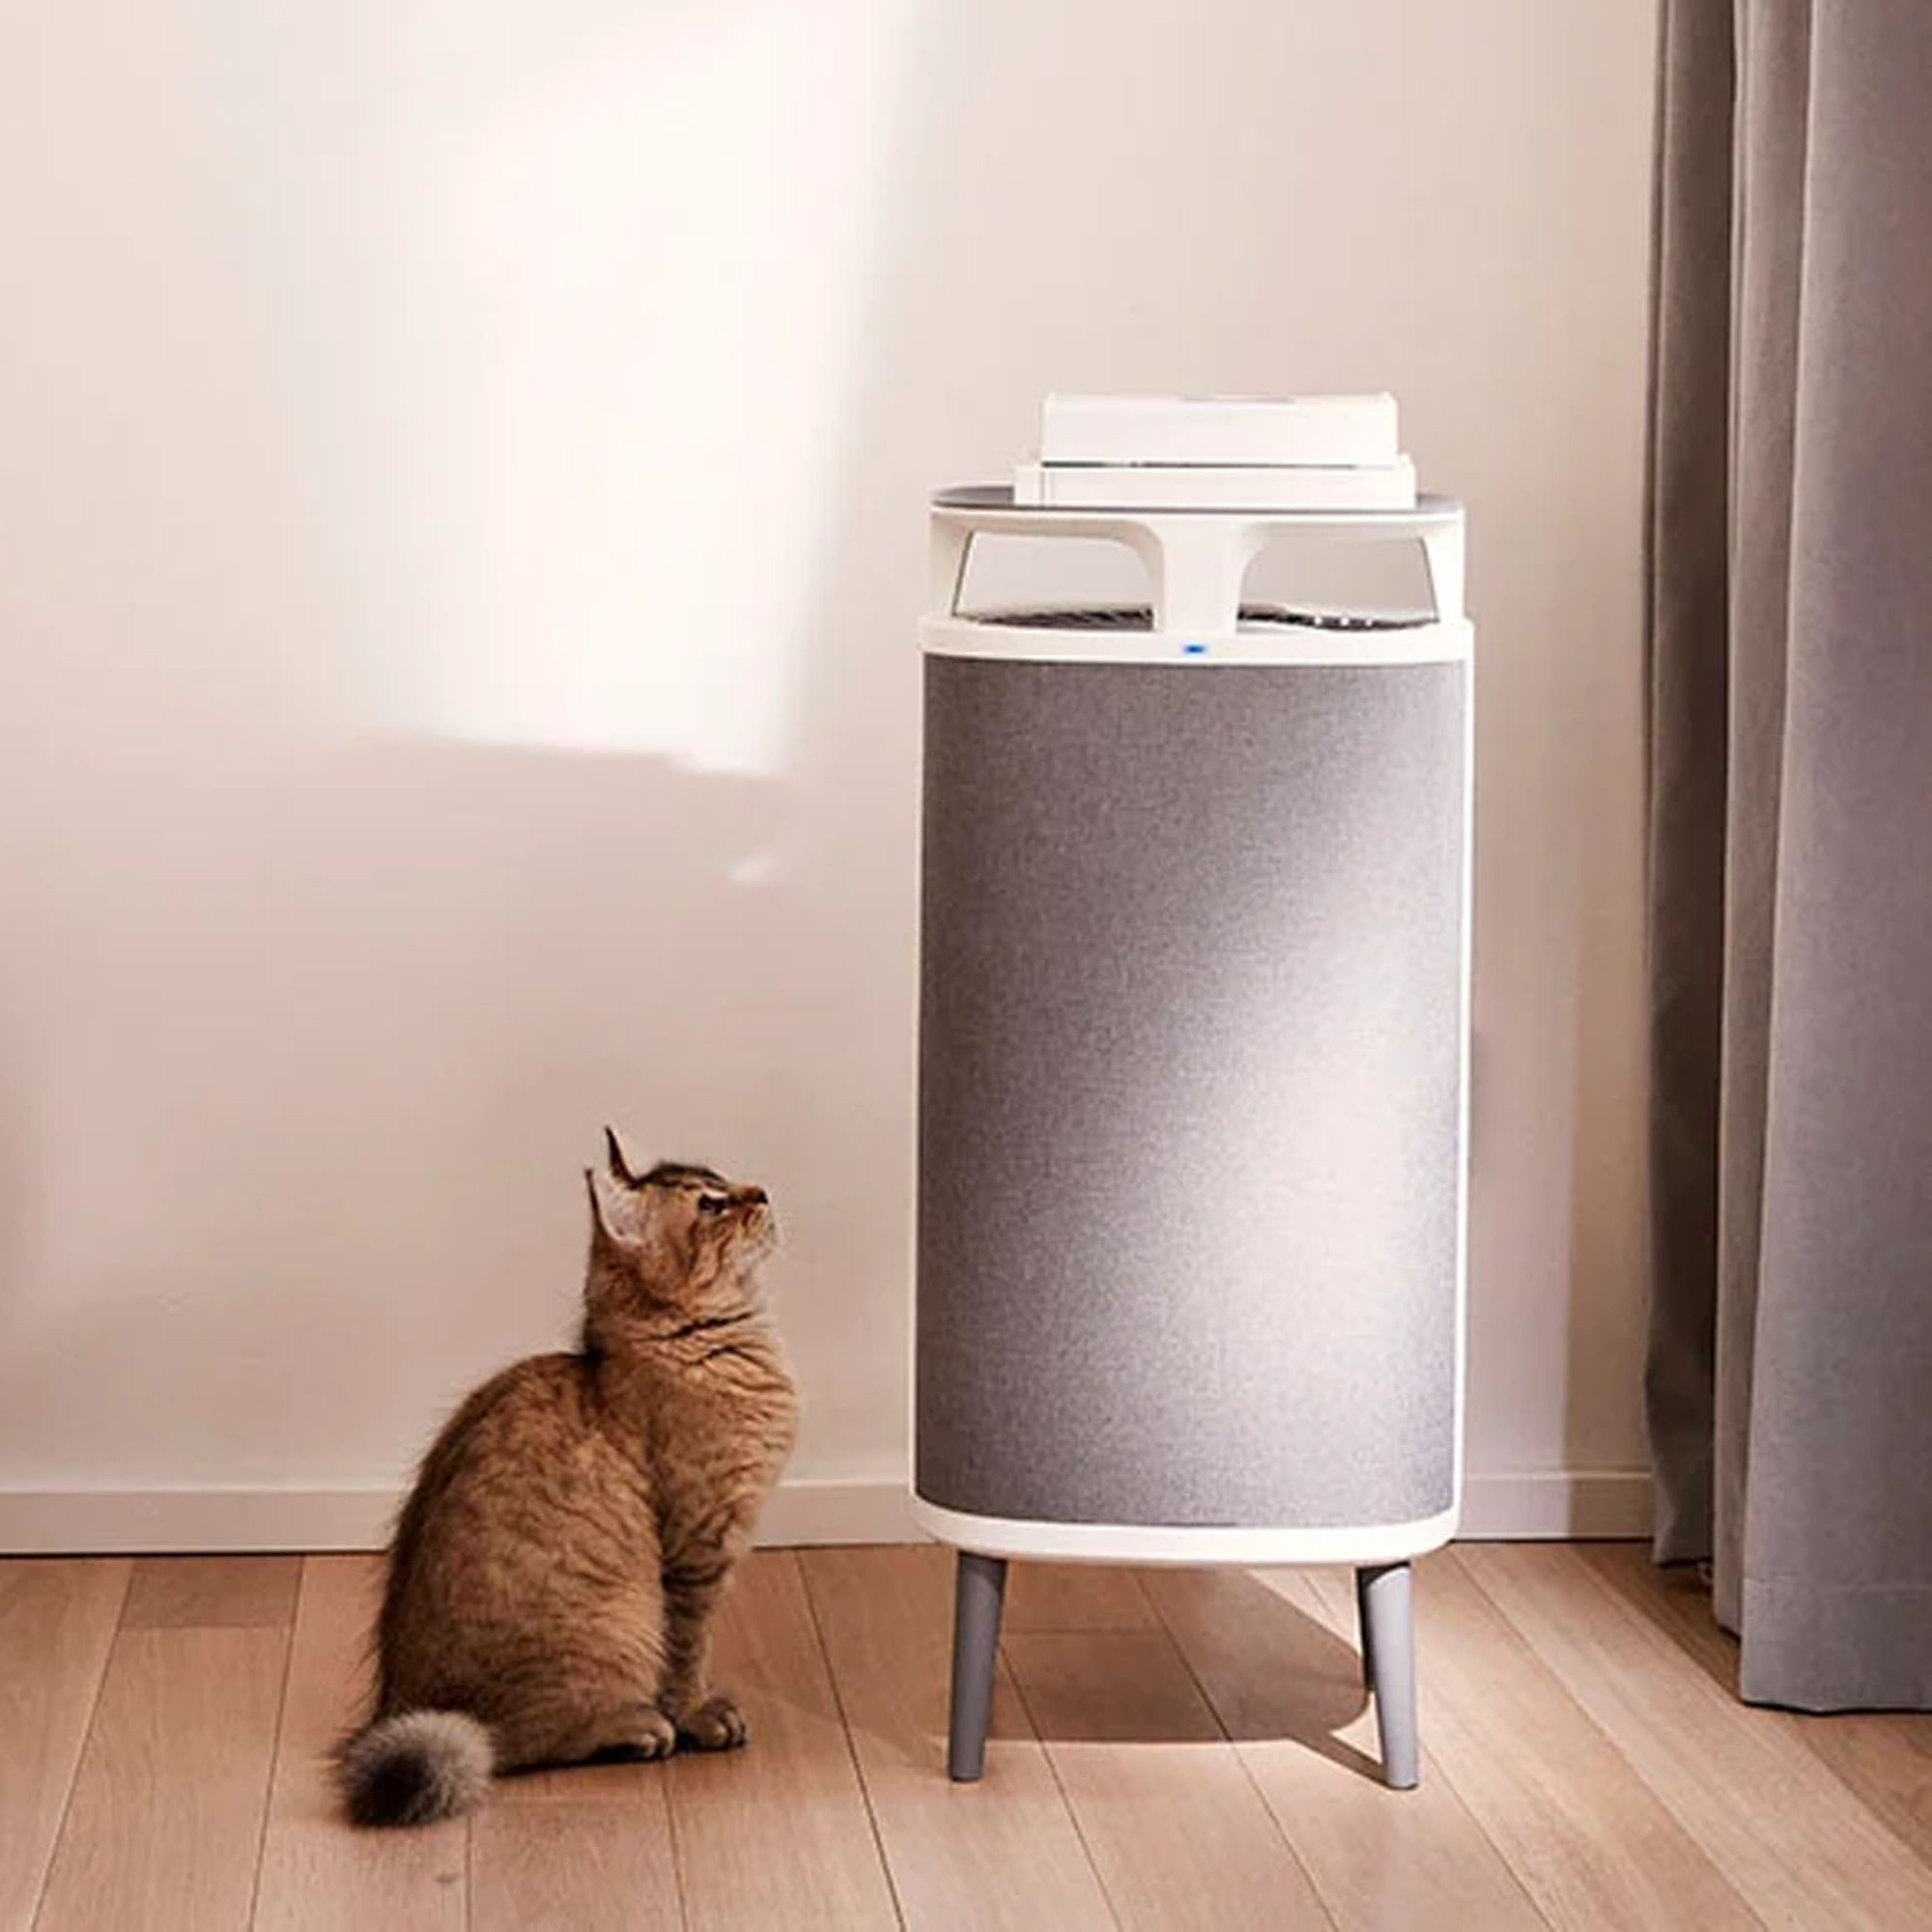 Blueair DustMagnet 5440i air purifier with a cat